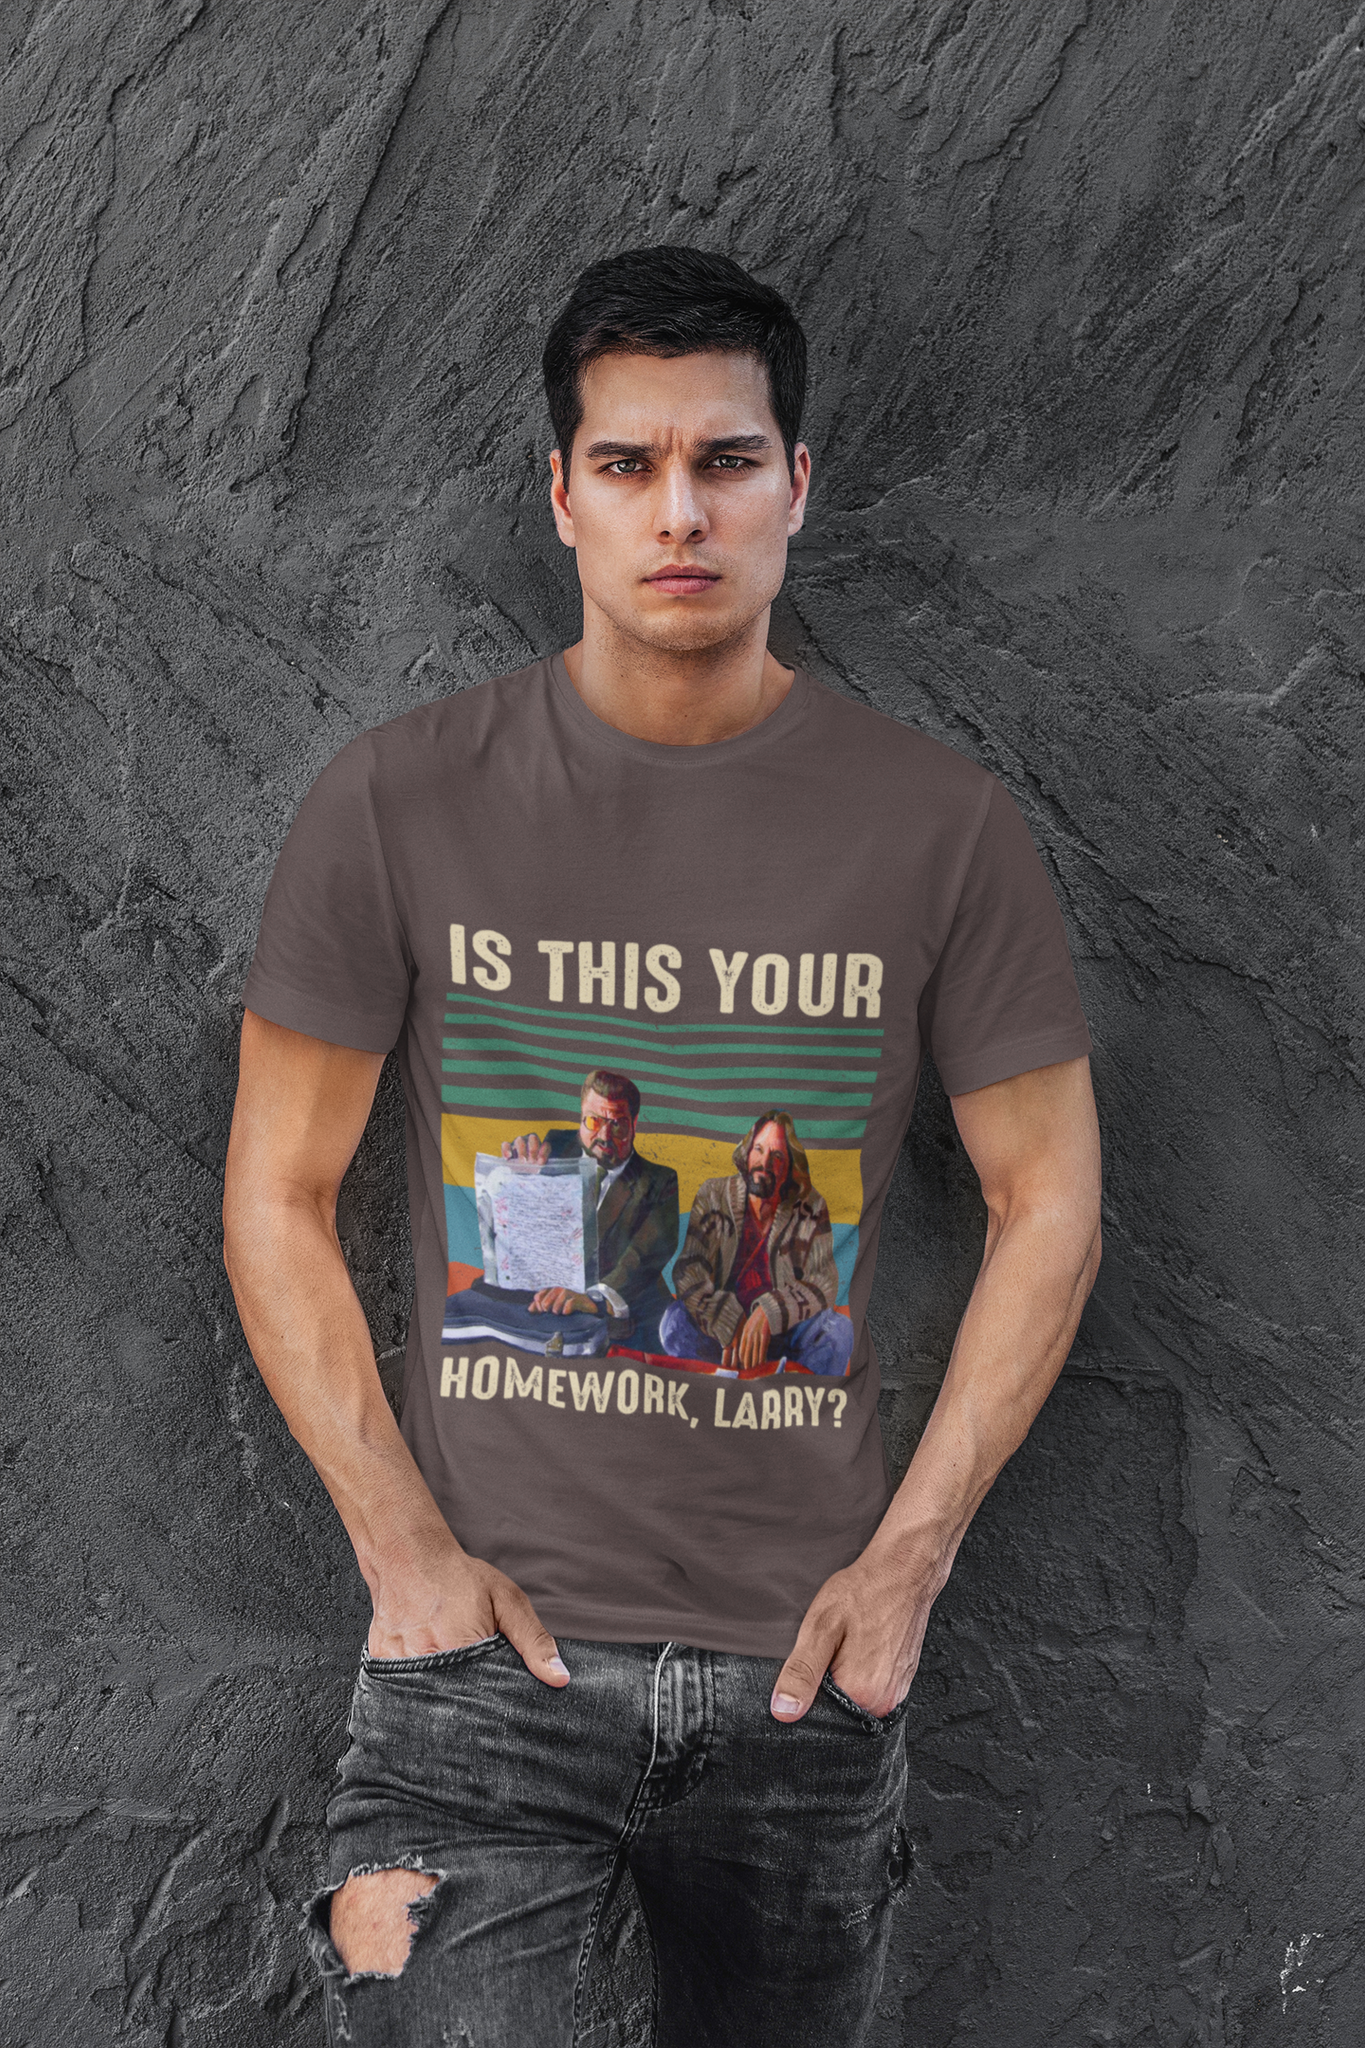 The Big Lebowski Vintage T Shirt, Is This Your Homework Larry Tshirt, Dude Walter T Shirt